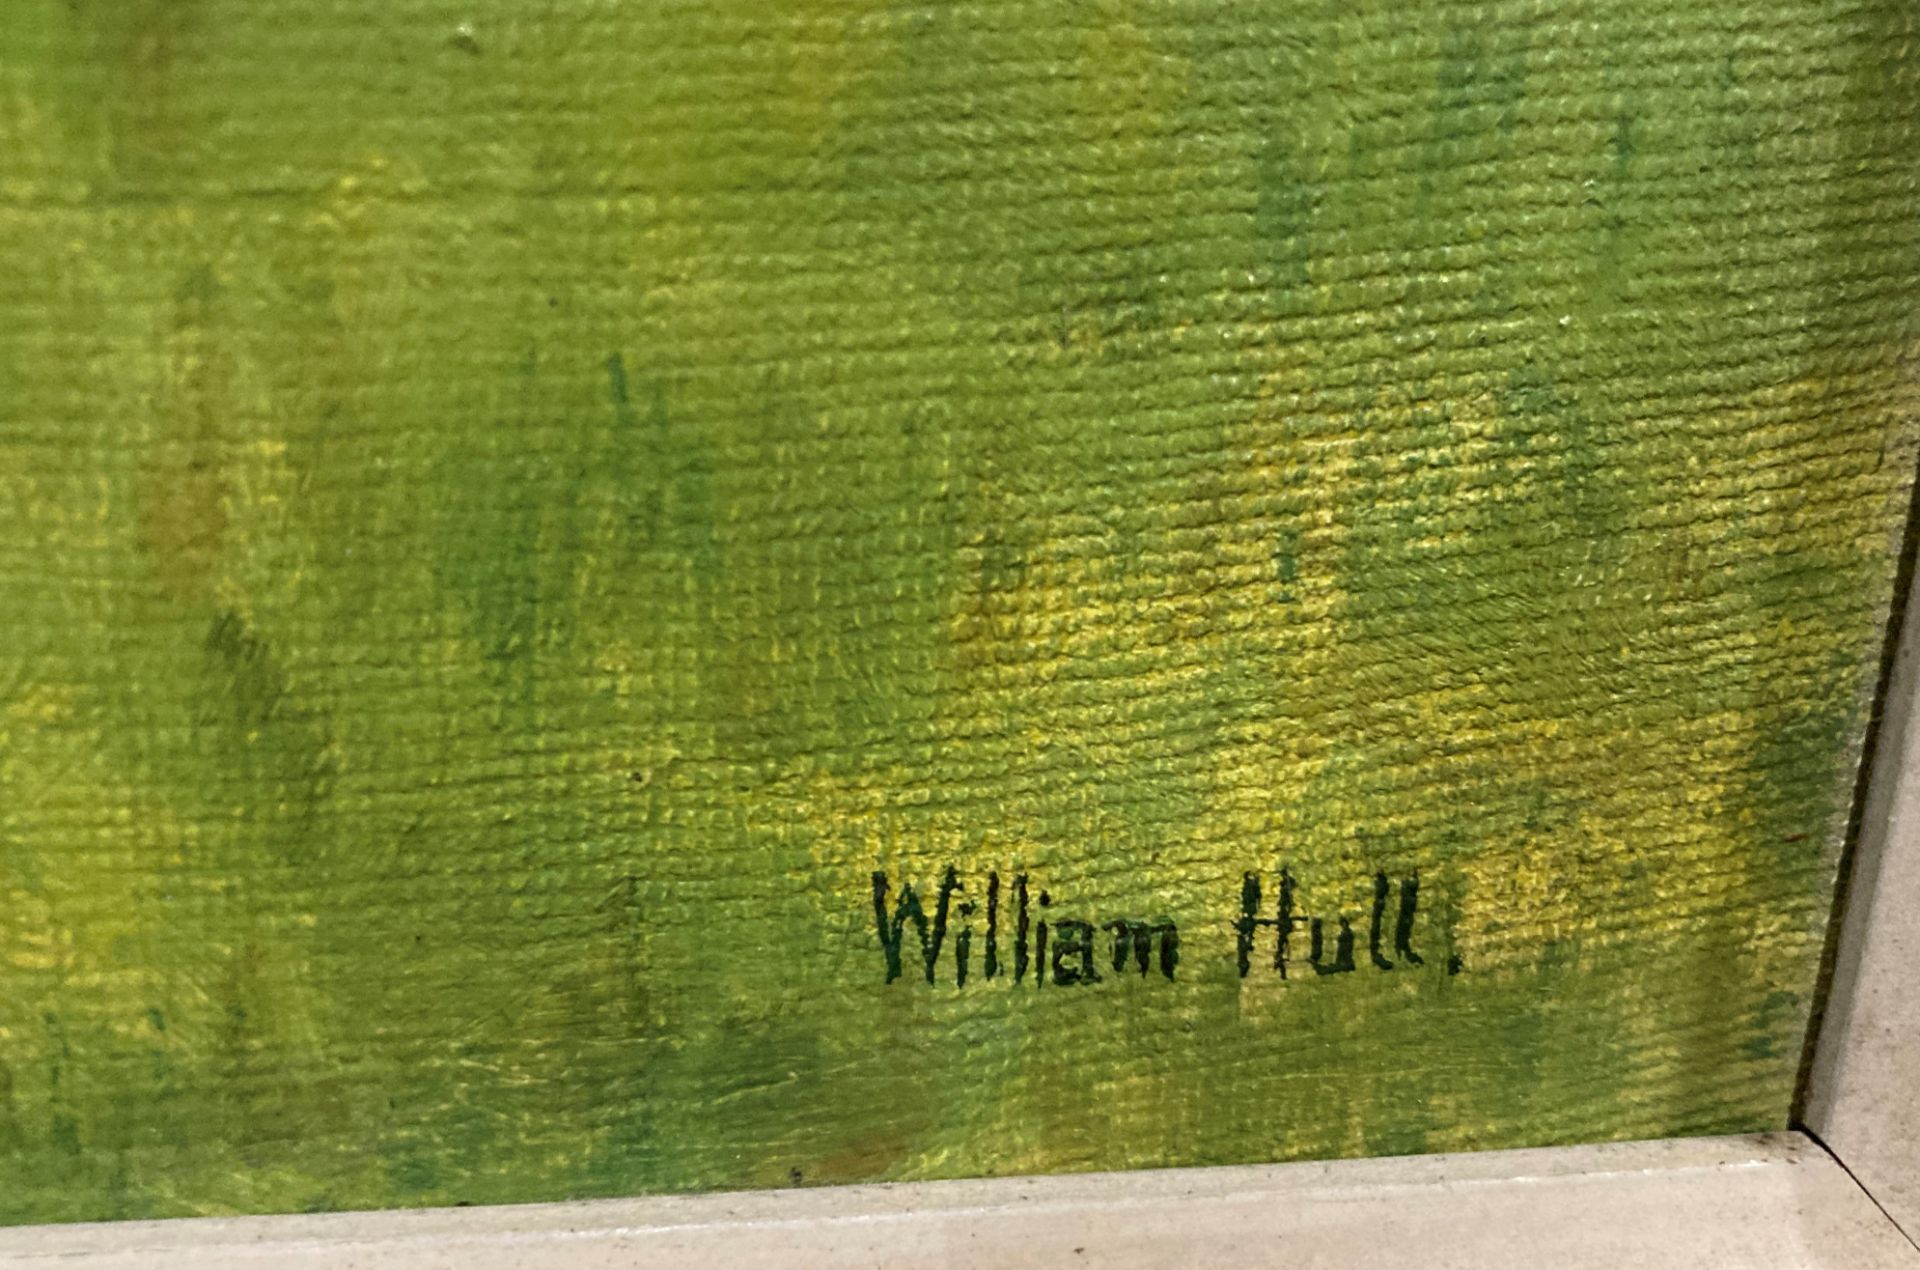 William Hull, 'Judith Aikshaw' 1957, Golden Retriever in a garden', oil on board, framed, - Image 2 of 4